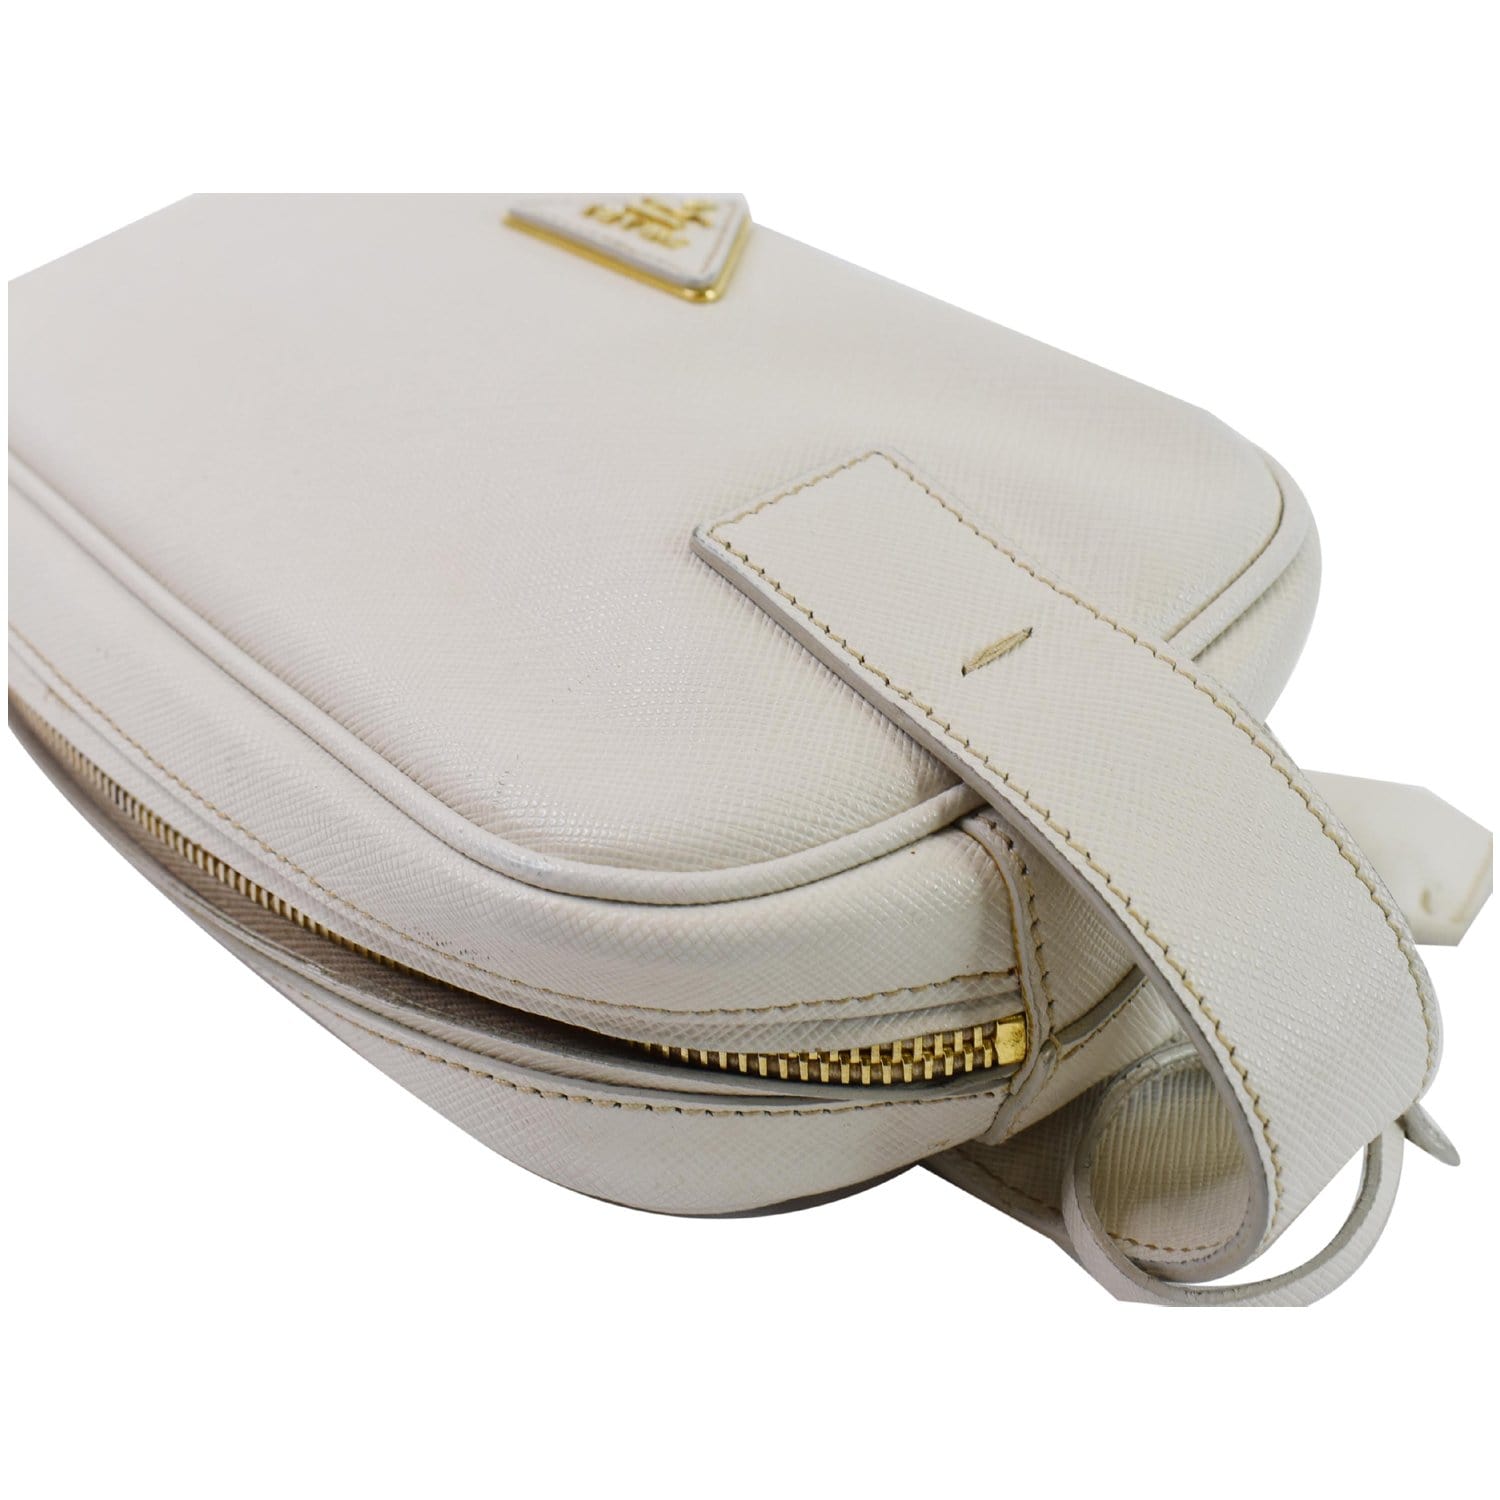 Prada Off White Saffiano Lux Leather Mini Pochette Bag Prada